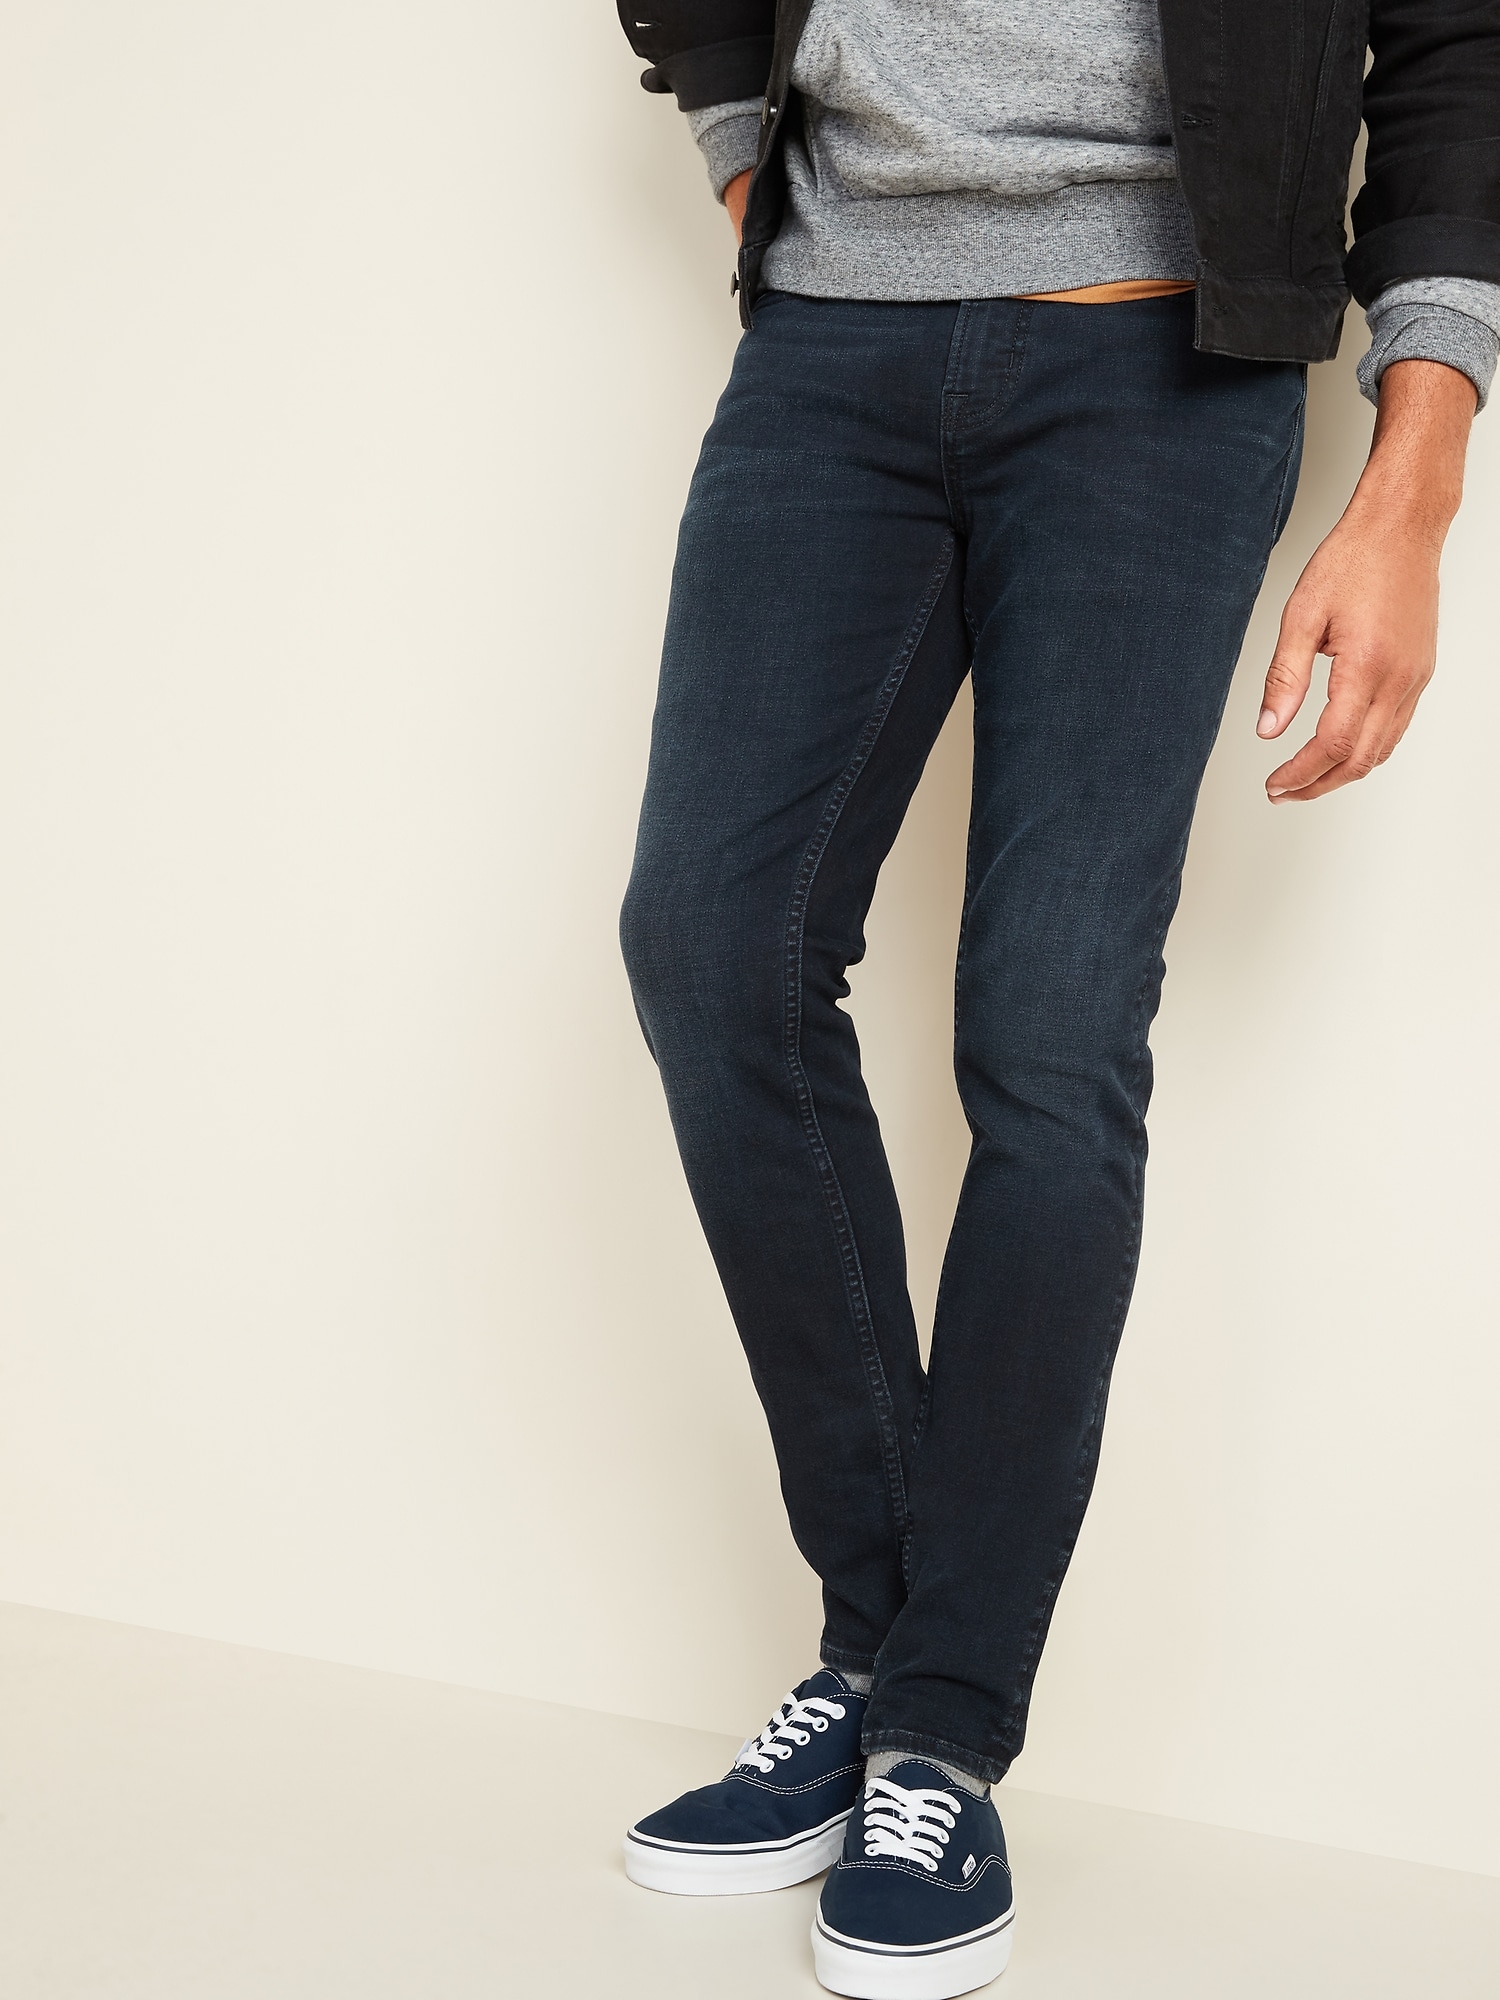 Super Skinny Built-In Flex Max Dark-Wash Jeans for Men